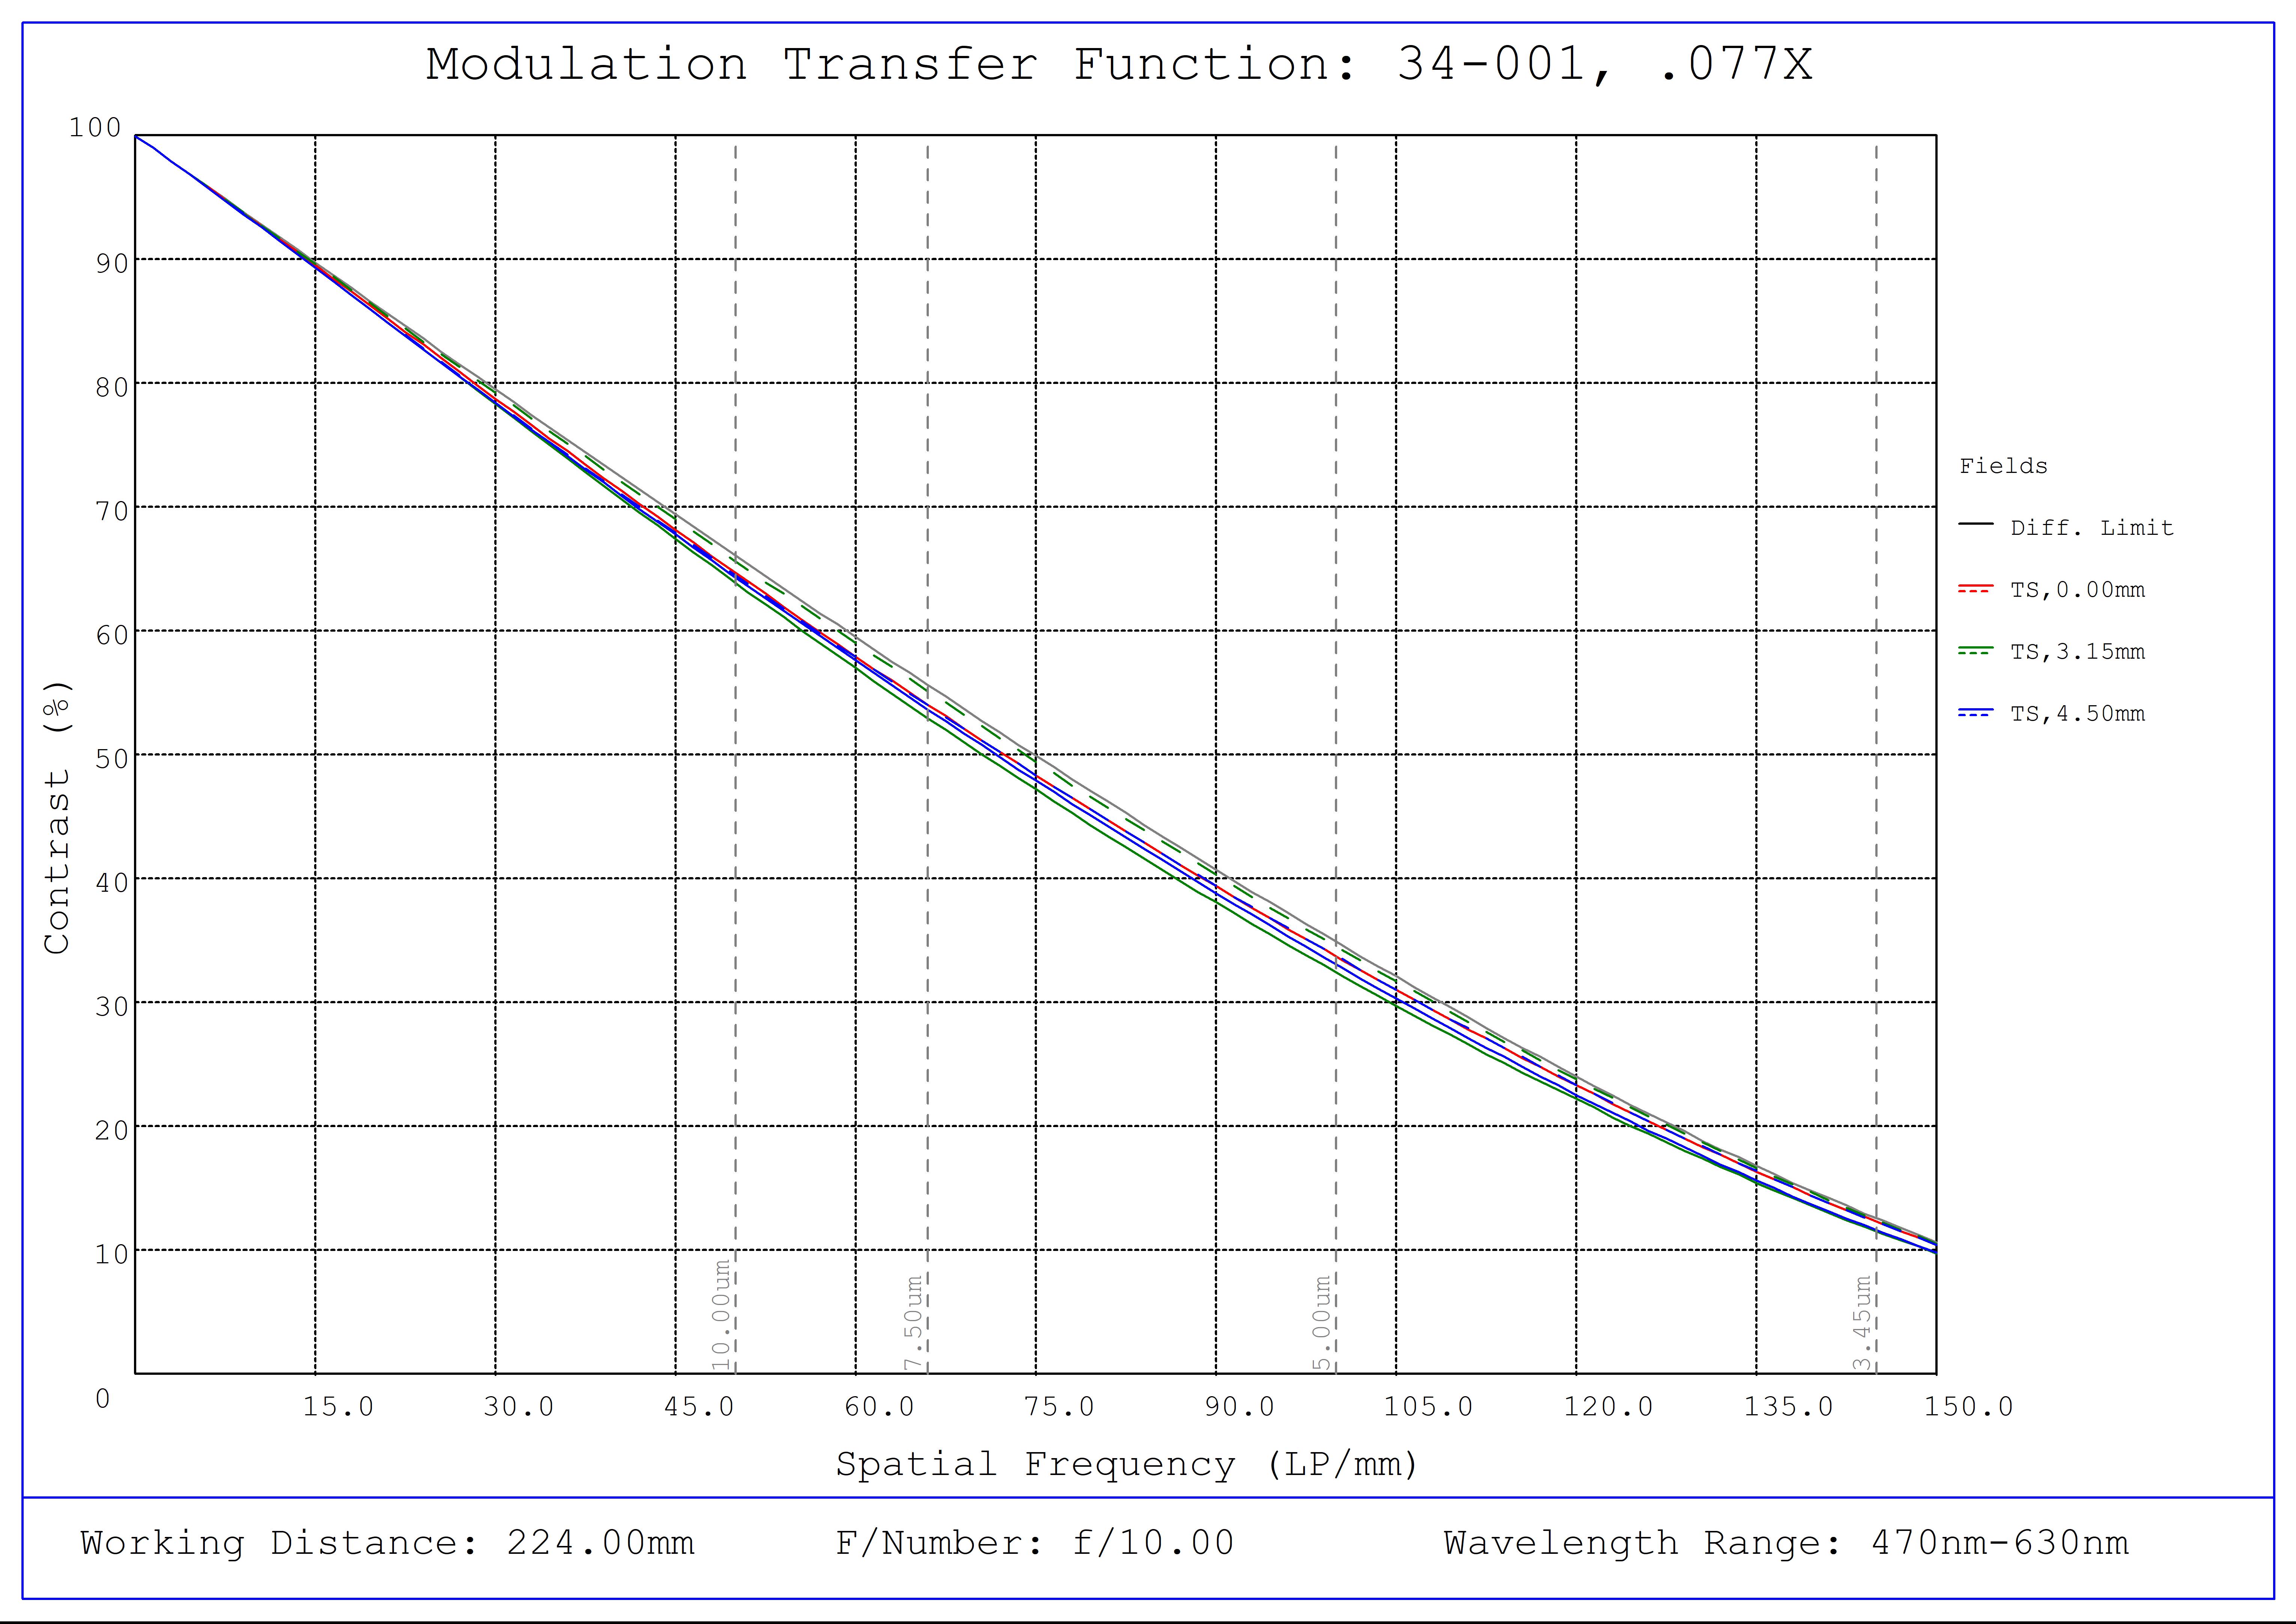 #34-001, 0.077X, 1/1.8" C-Mount TitanTL® Telecentric Lens, Modulated Transfer Function (MTF) Plot, 224mm Working Distance, f10